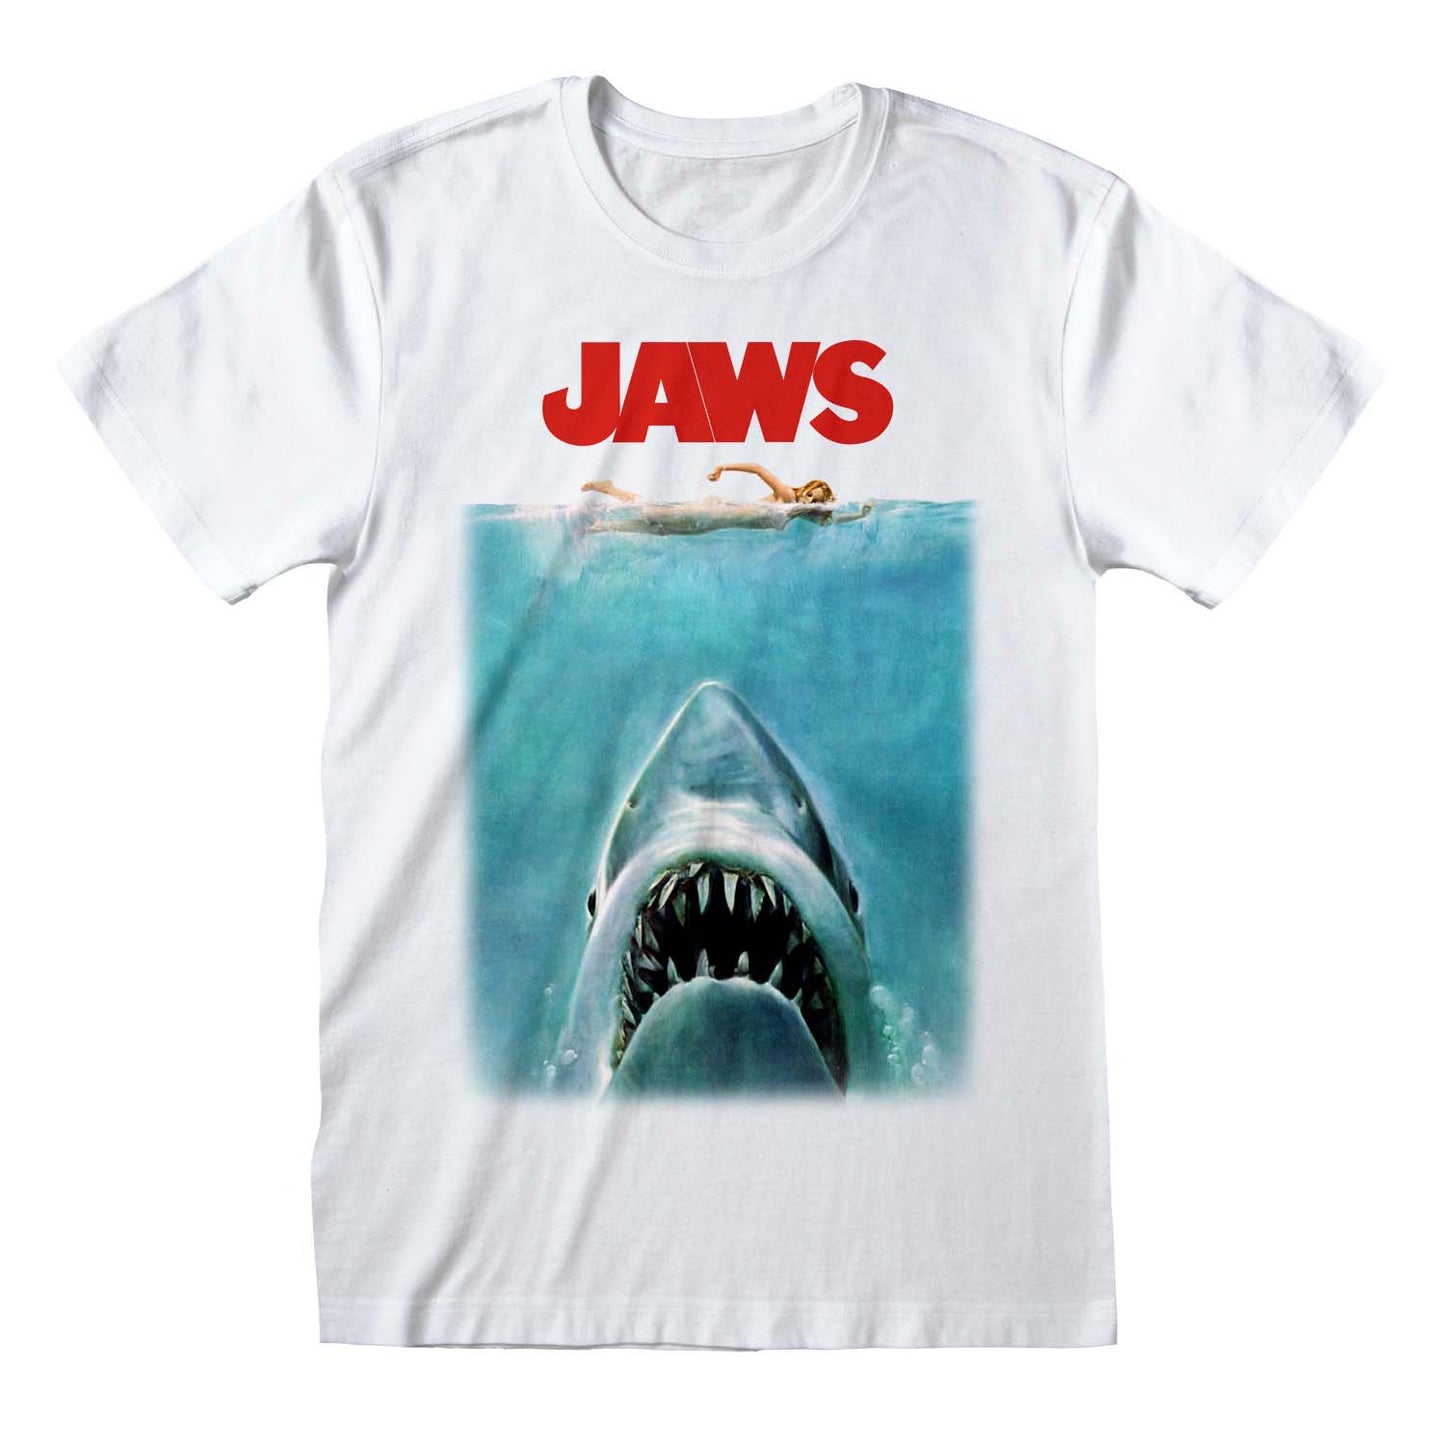 JAWS - Poster (HI) T-Shirt